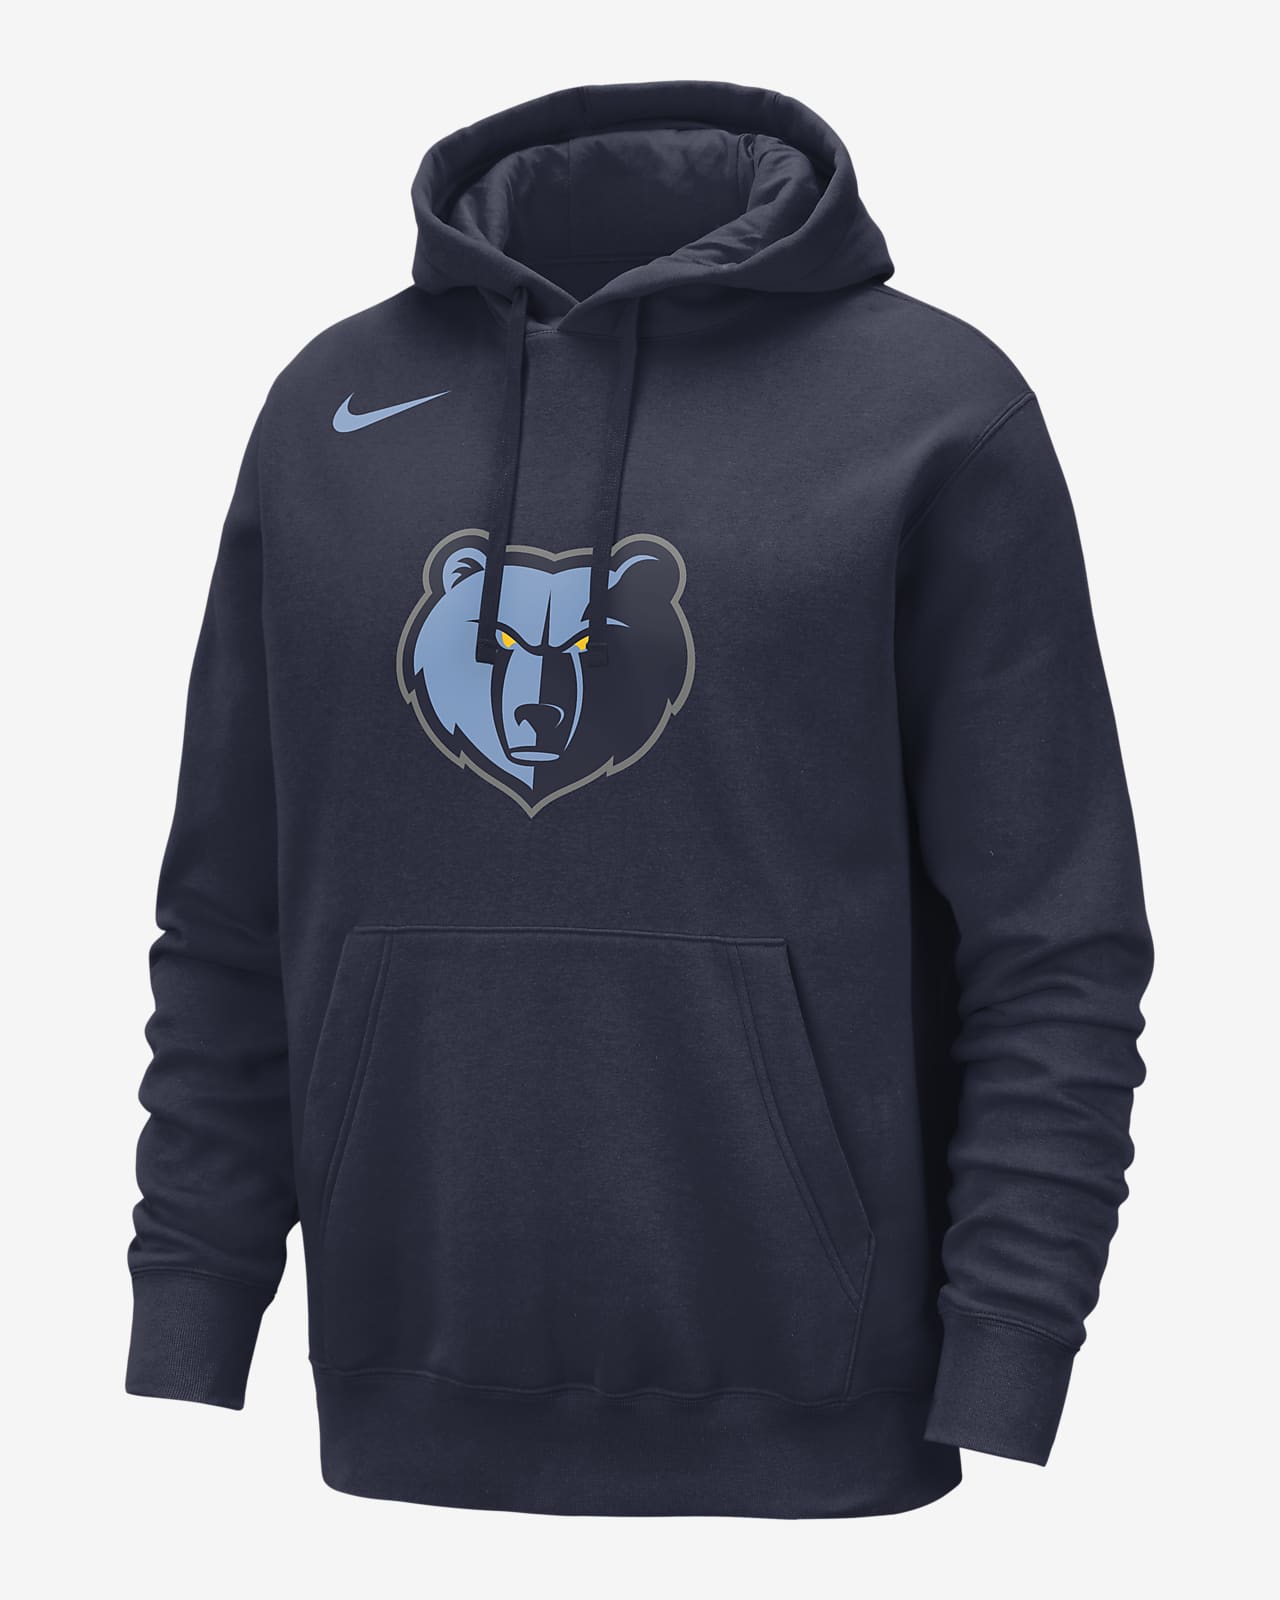 Memphis Grizzlies Club Nike NBA-Hoodie für Herren